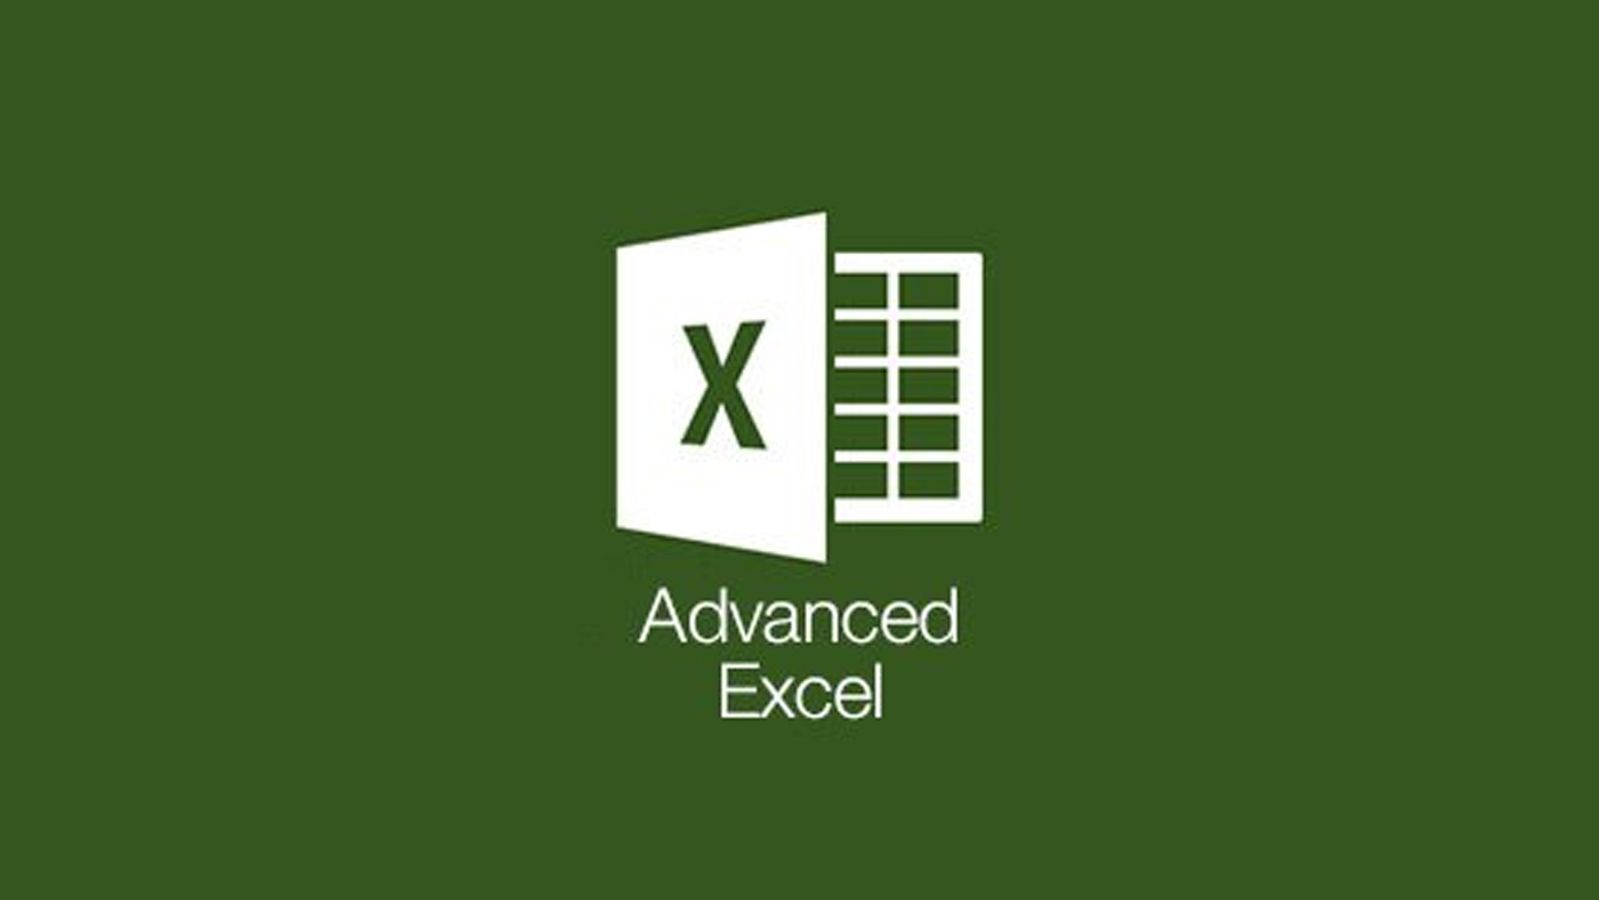 Advanced Microsoft Excel 2019 PC